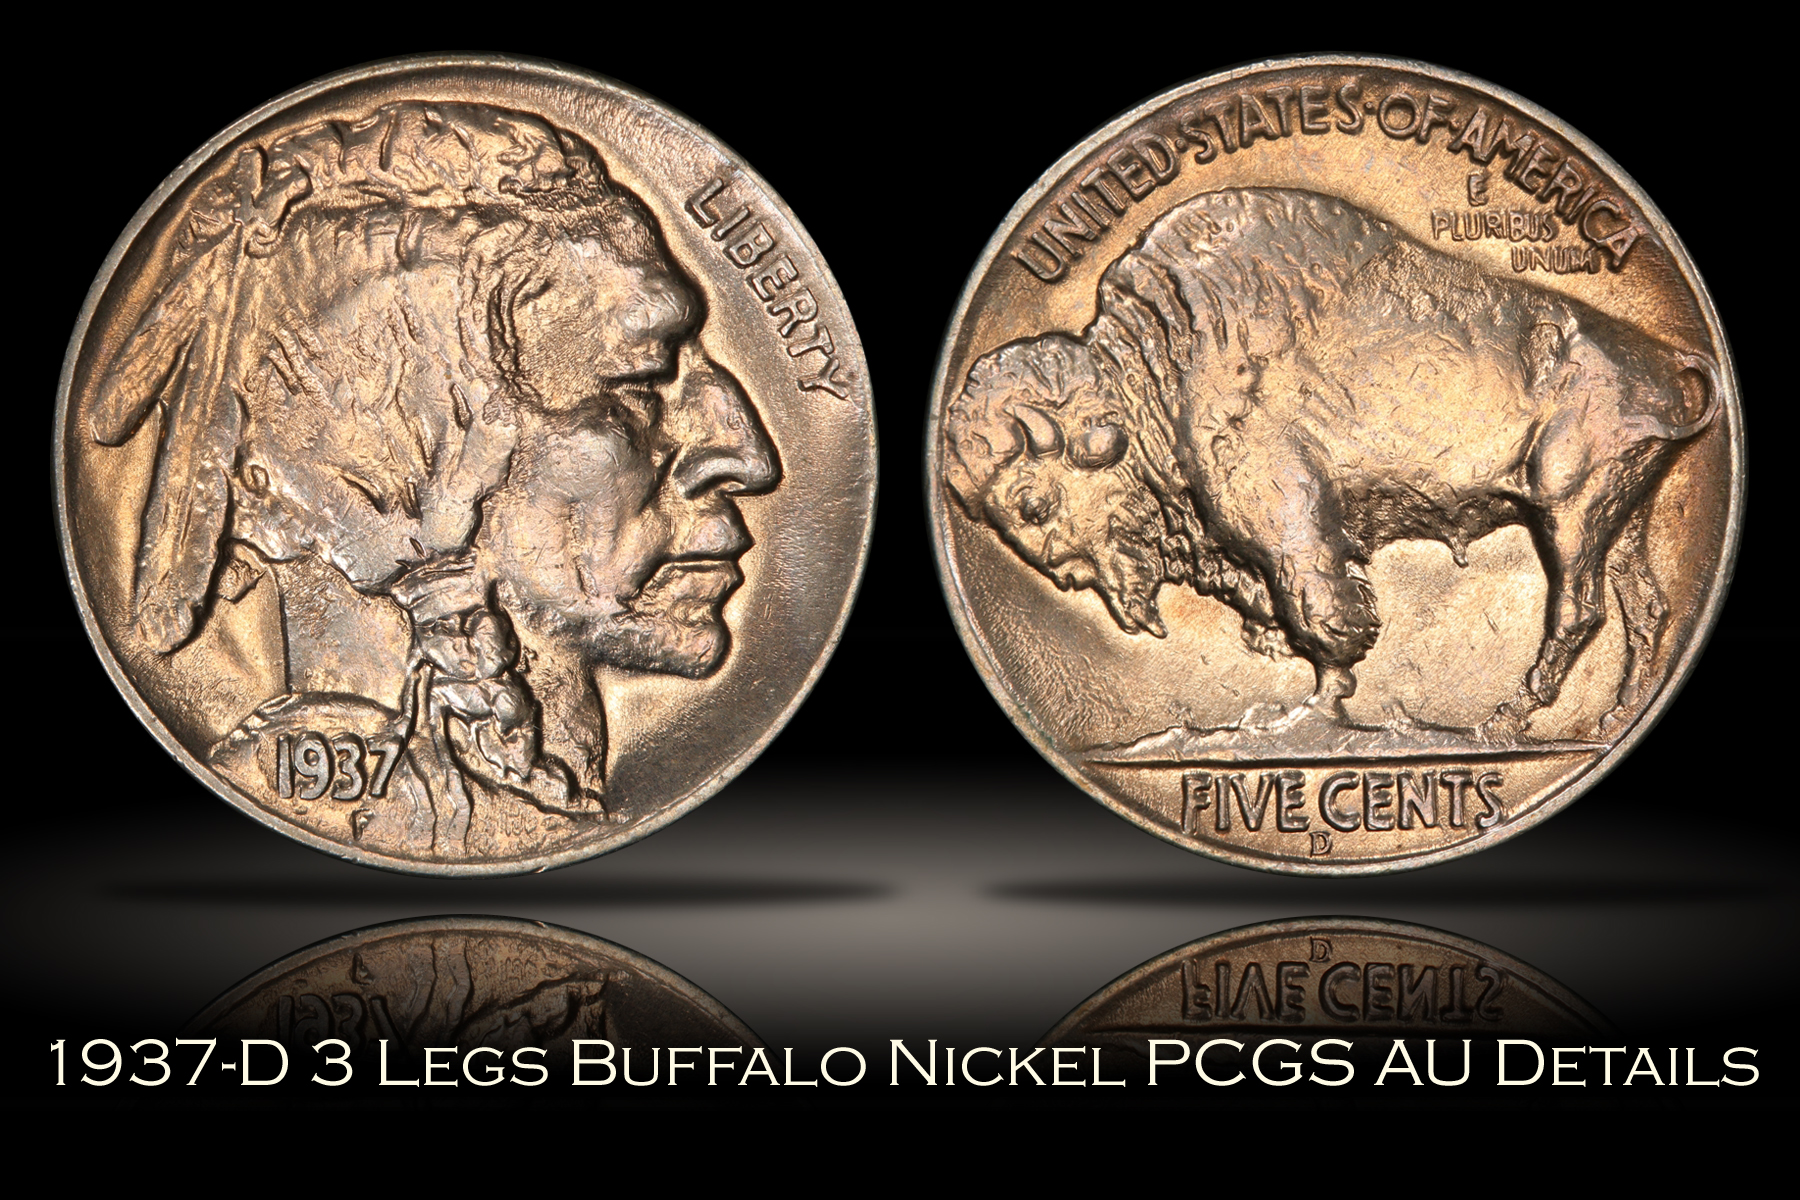 1937-D 3 Legs Buffalo Nickel PCGS AU Details